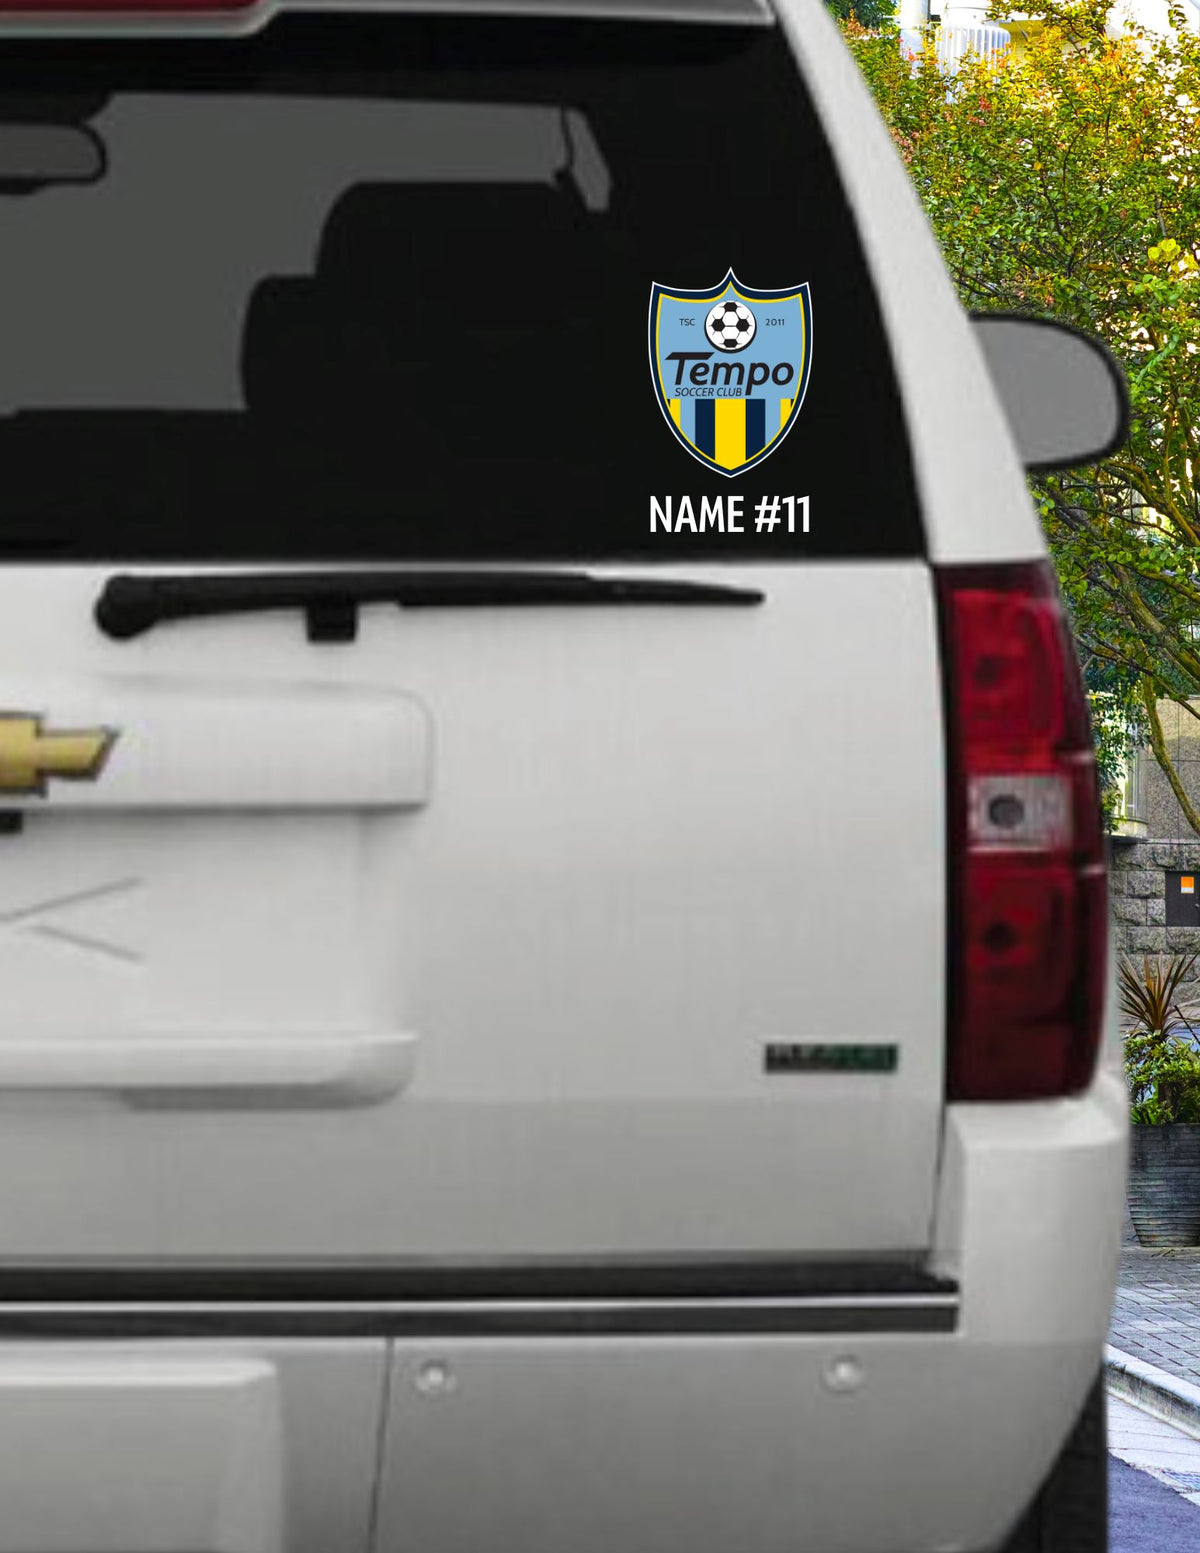 Tempo Soccer Club Car Decal sticker Goal Kick Soccer 